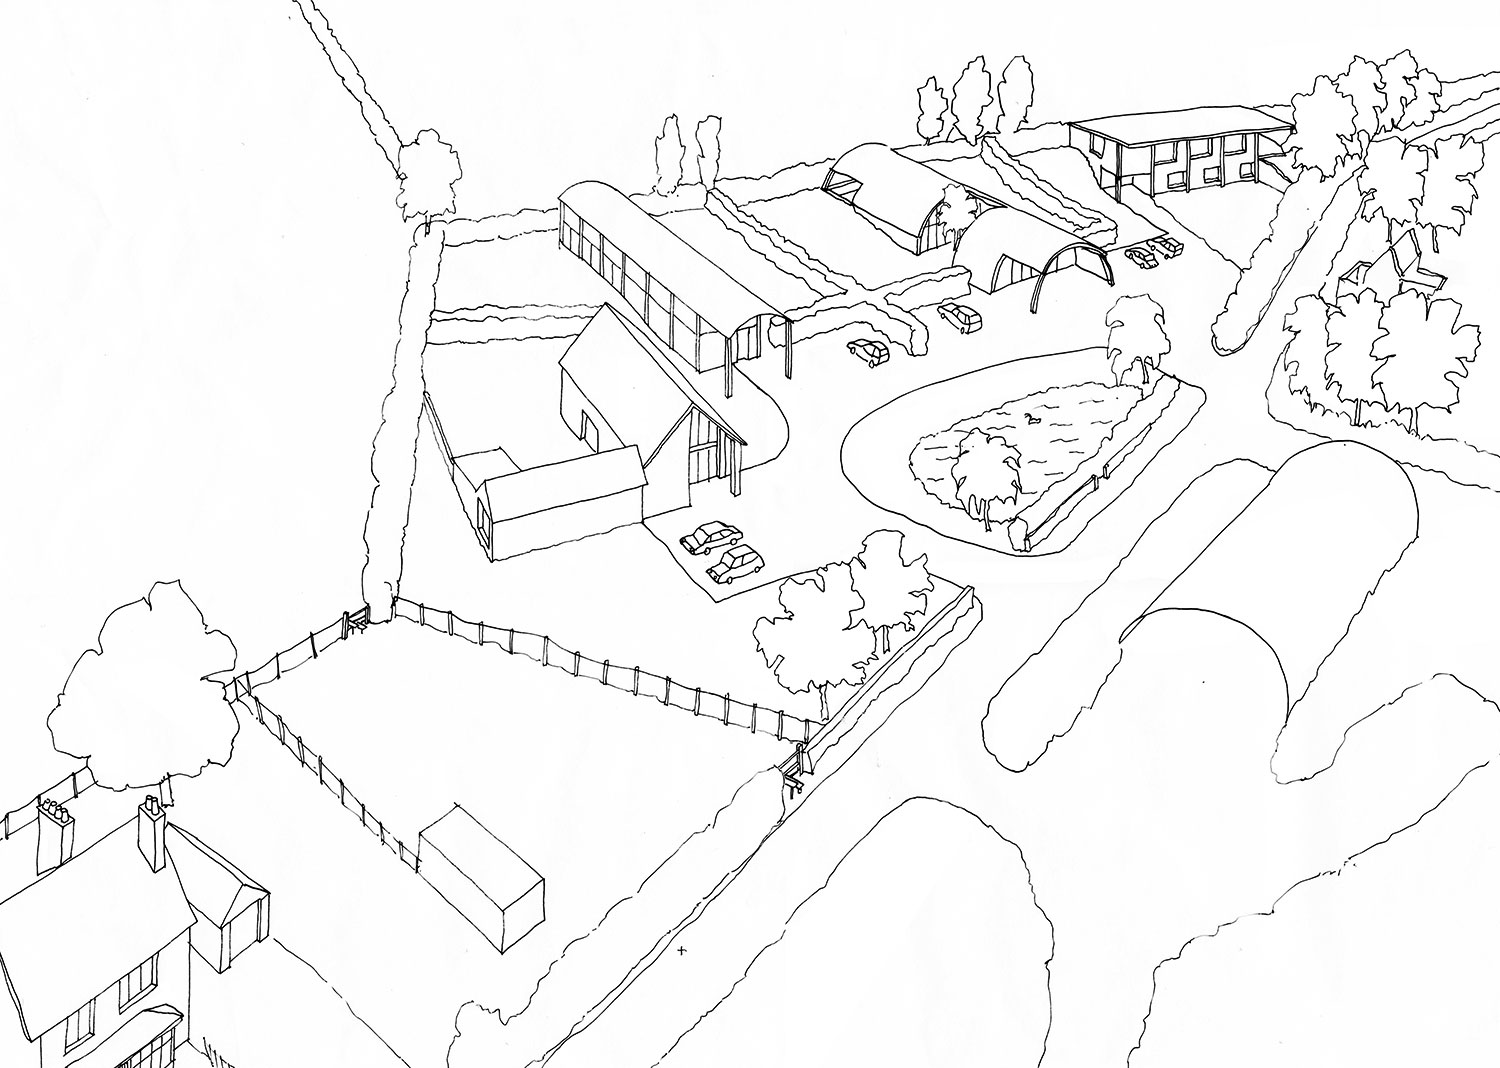 Barns-Class-Q-Permitted-Development-Conversion-Somerset-Architect-Sketch.jpg